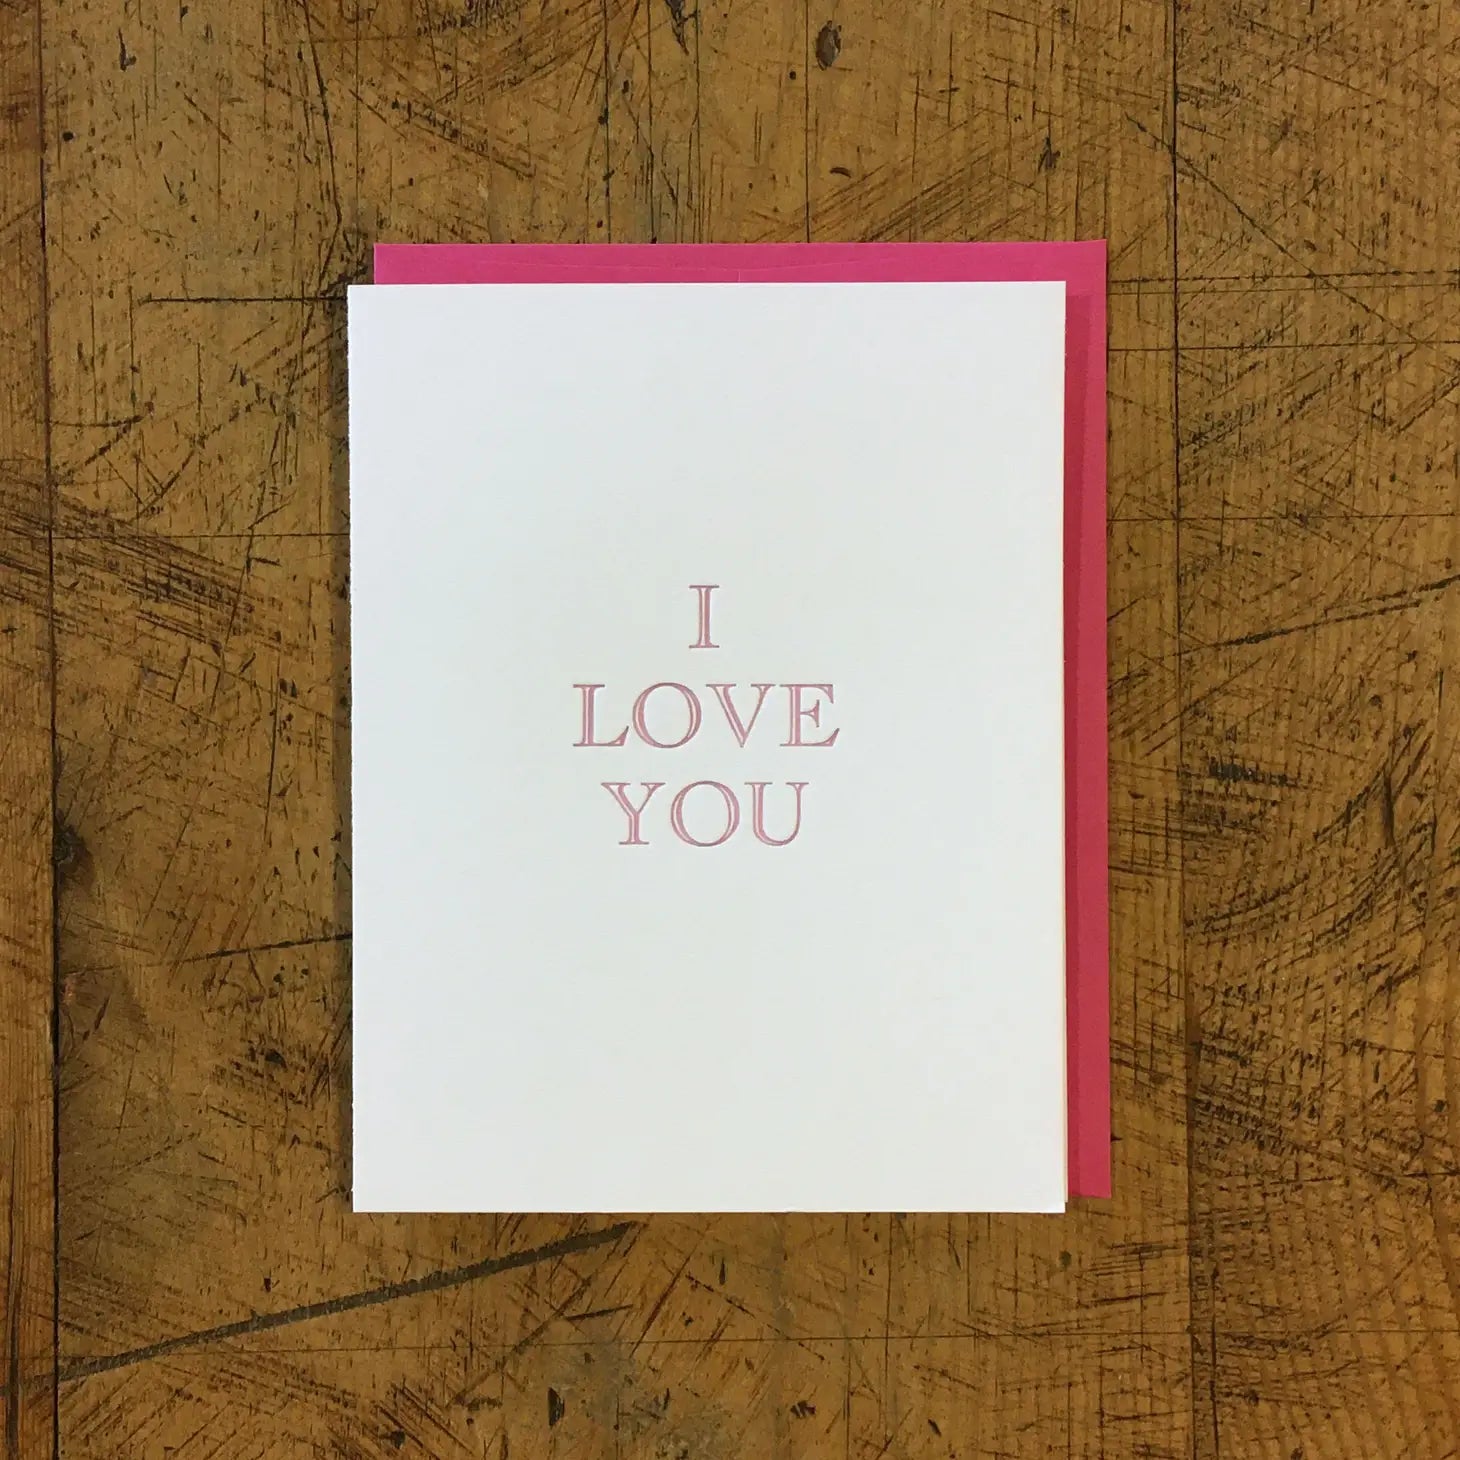 Green Bird Press - I Love You Letterpress Card